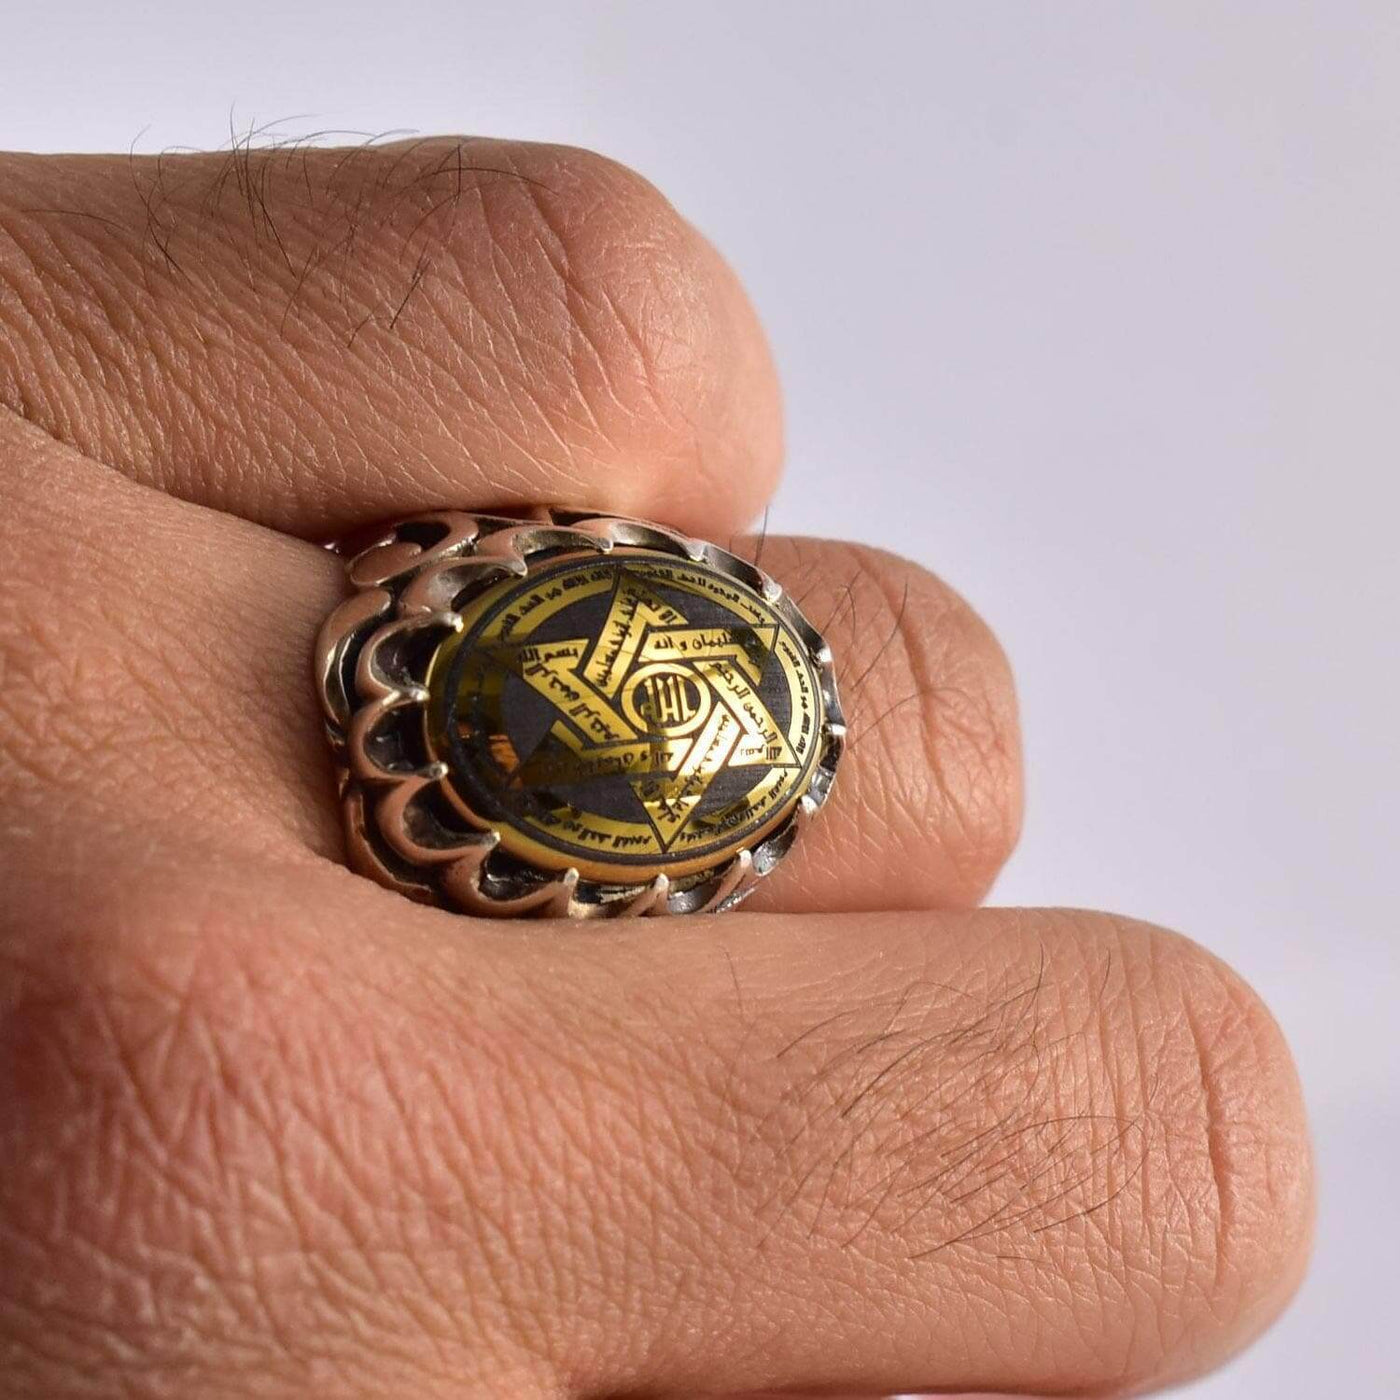 Hadeed Chini Hadeed Sini Ring For men | Hematite Ring Jewelry | 925 Silver US Size 10.25 - Al Ali Gems